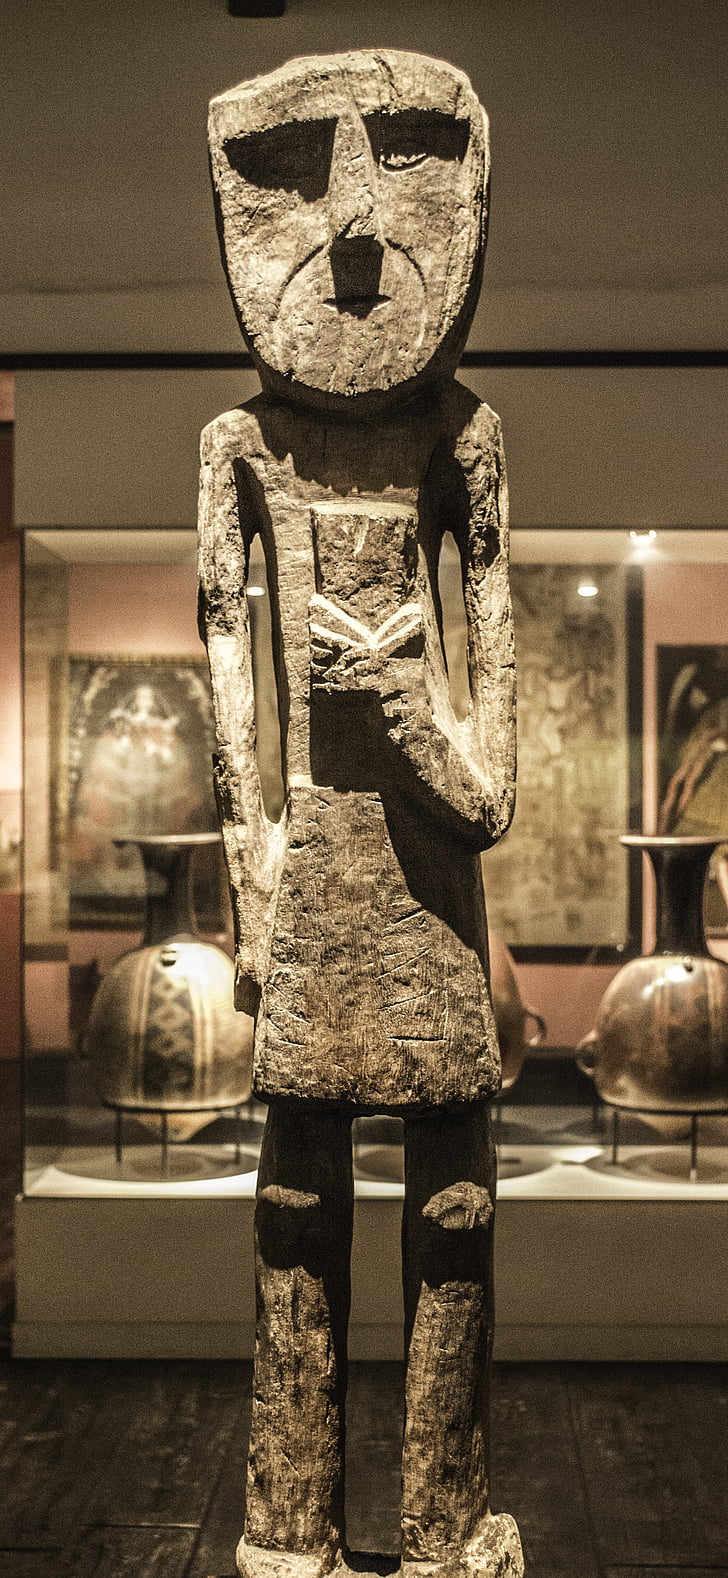 statula, muziejus, Liesas, medinis, senas, Peru, artefaktas